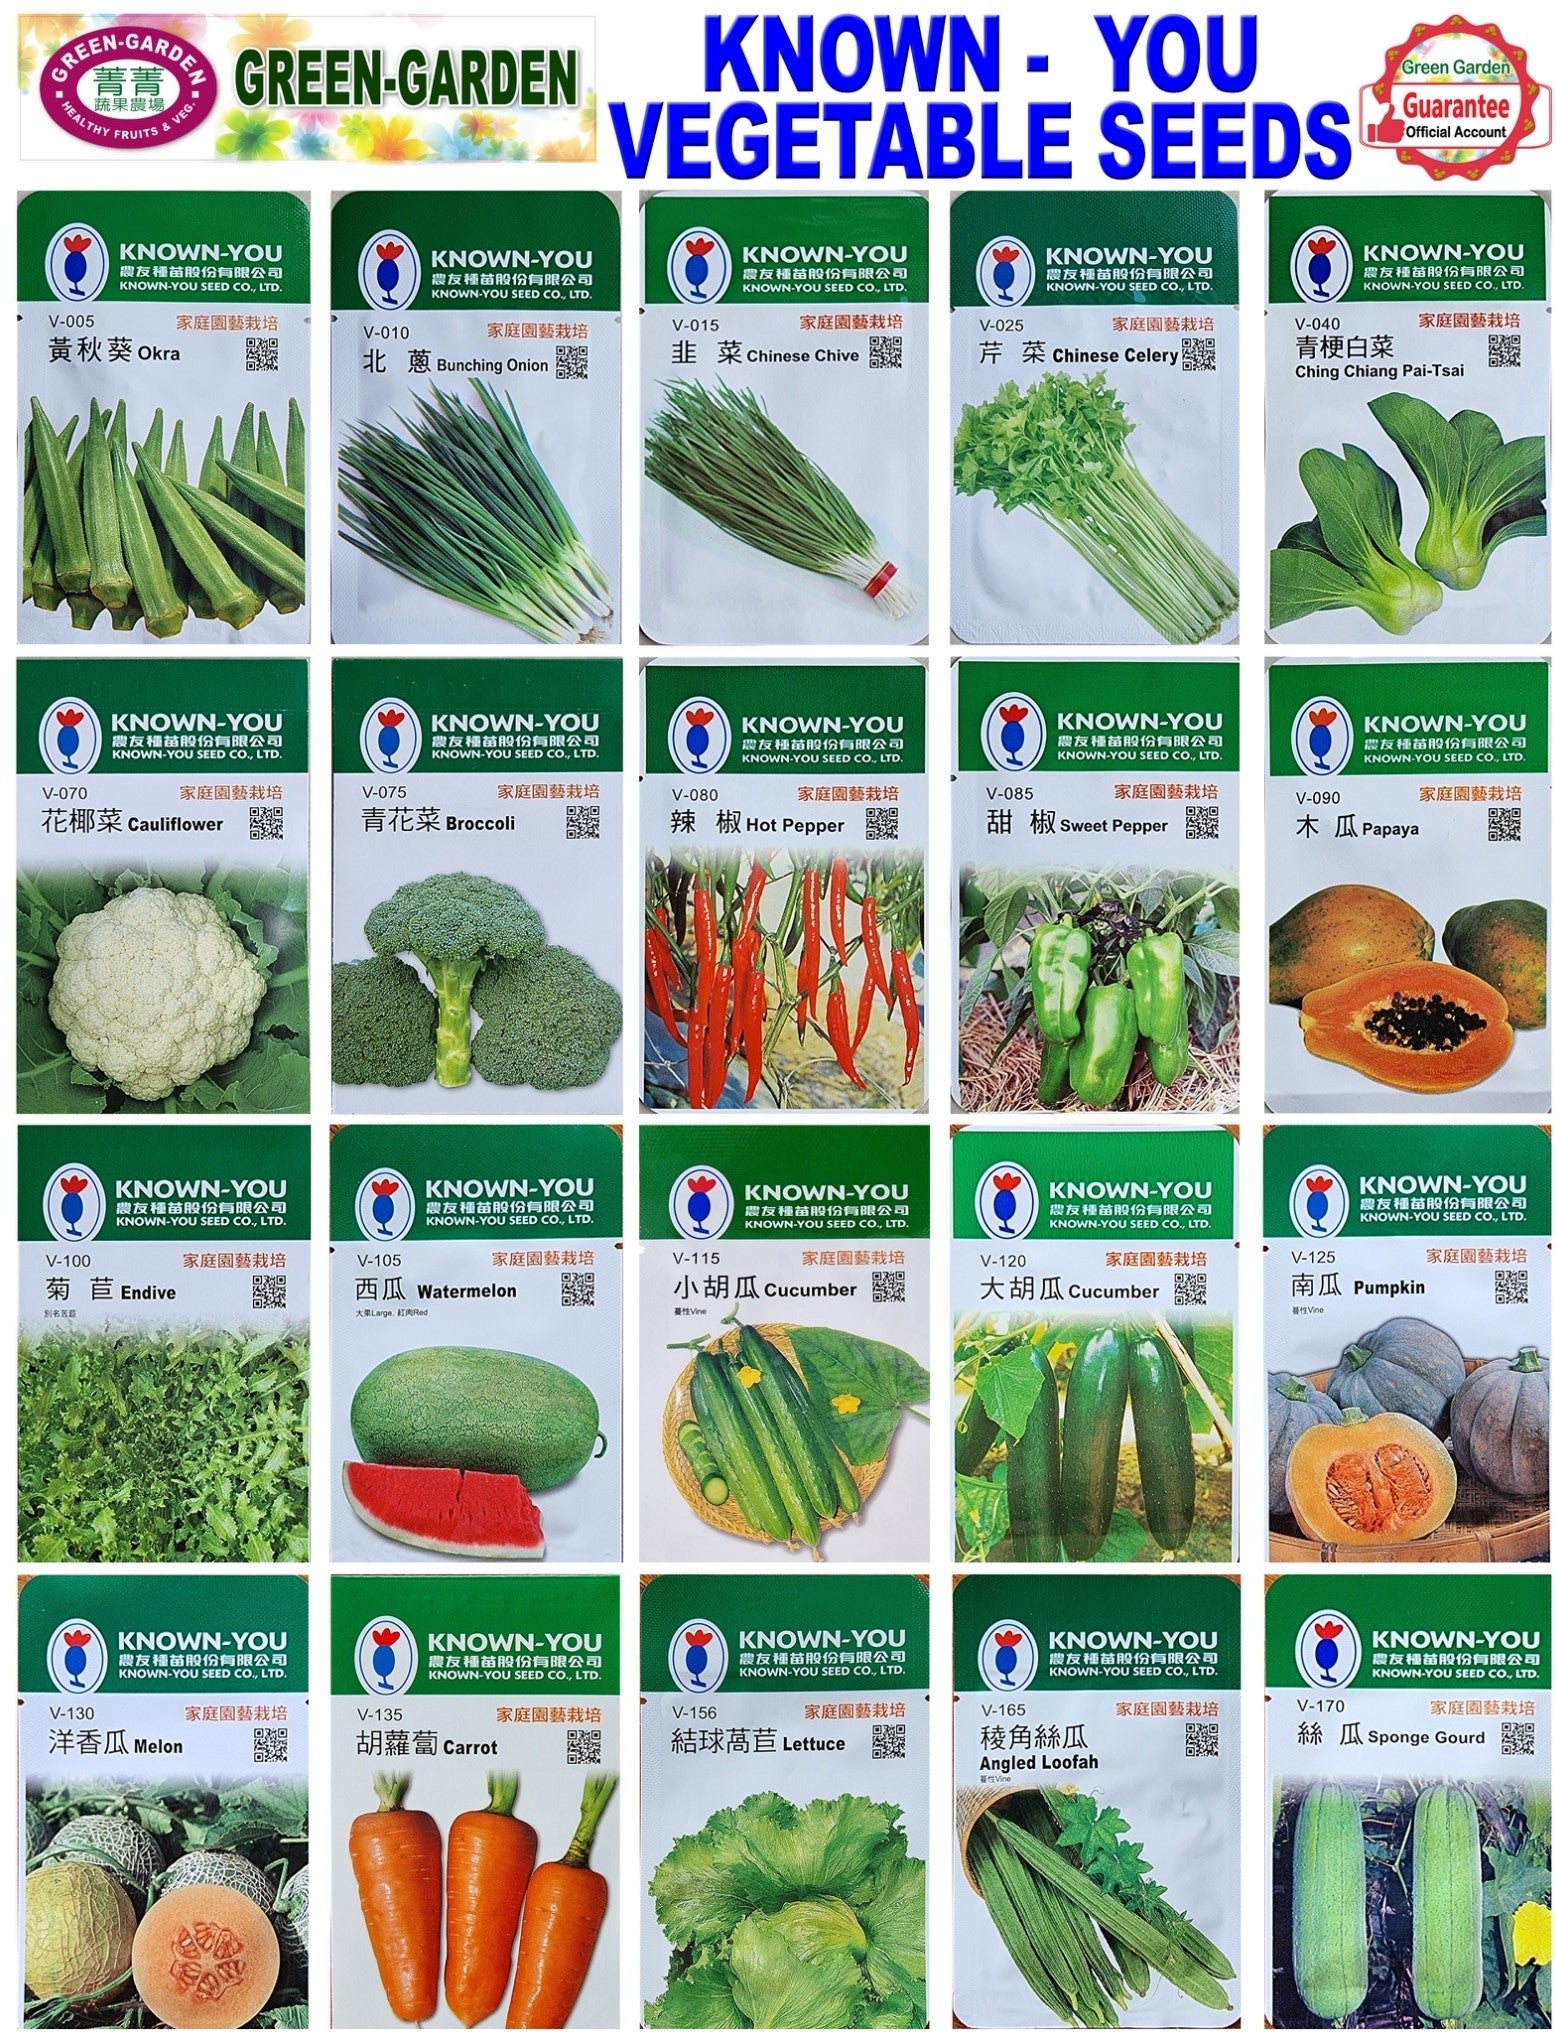 Known You Vegetable Seeds (V-165 Ridge Loofah)